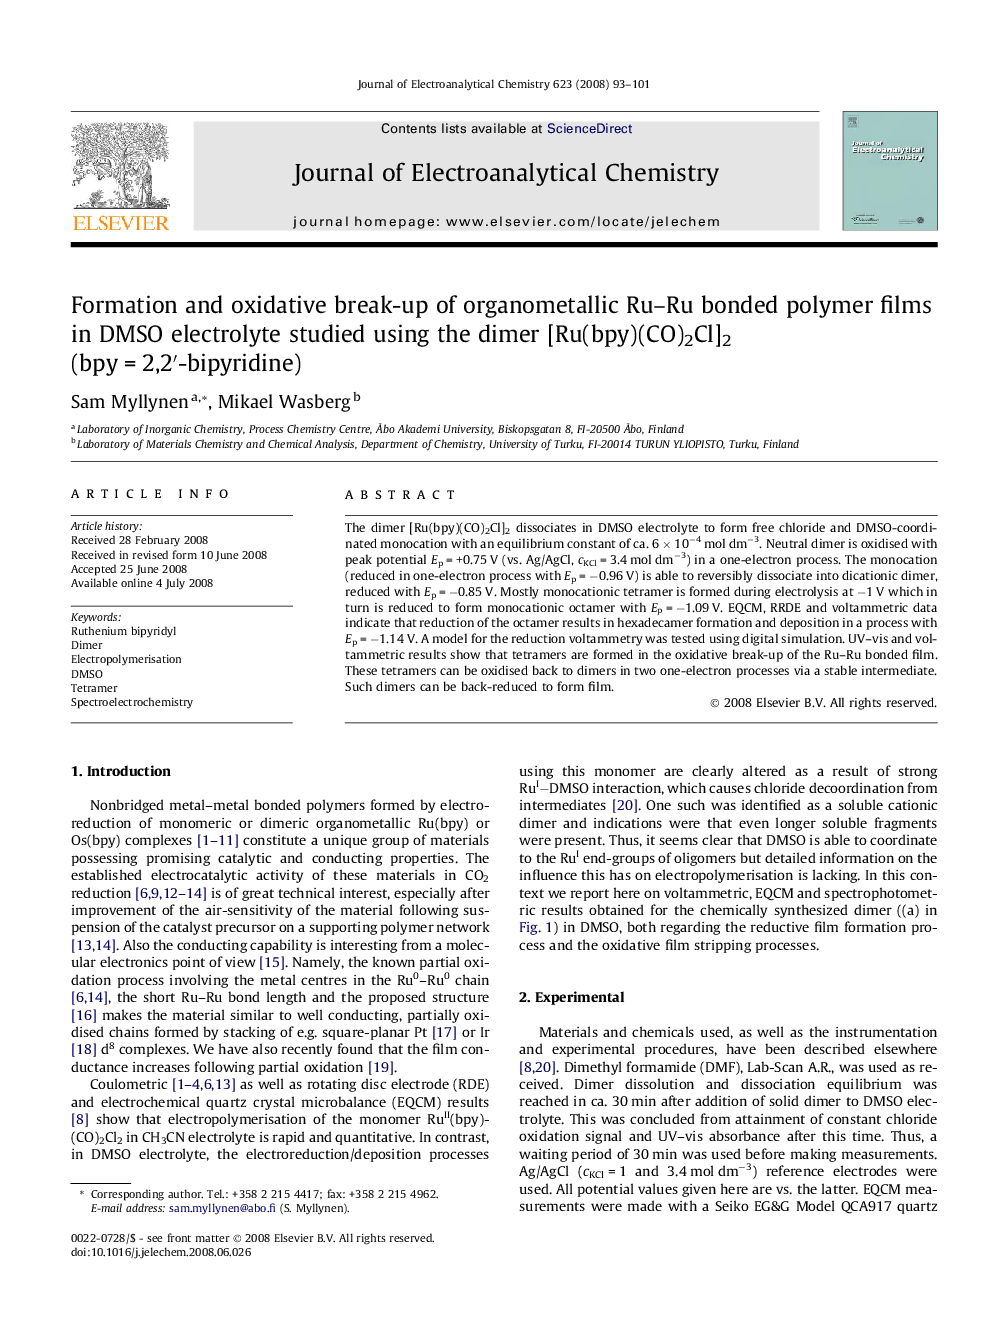 Formation and oxidative break-up of organometallic Ru–Ru bonded polymer films in DMSO electrolyte studied using the dimer [Ru(bpy)(CO)2Cl]2 (bpy = 2,2′-bipyridine)